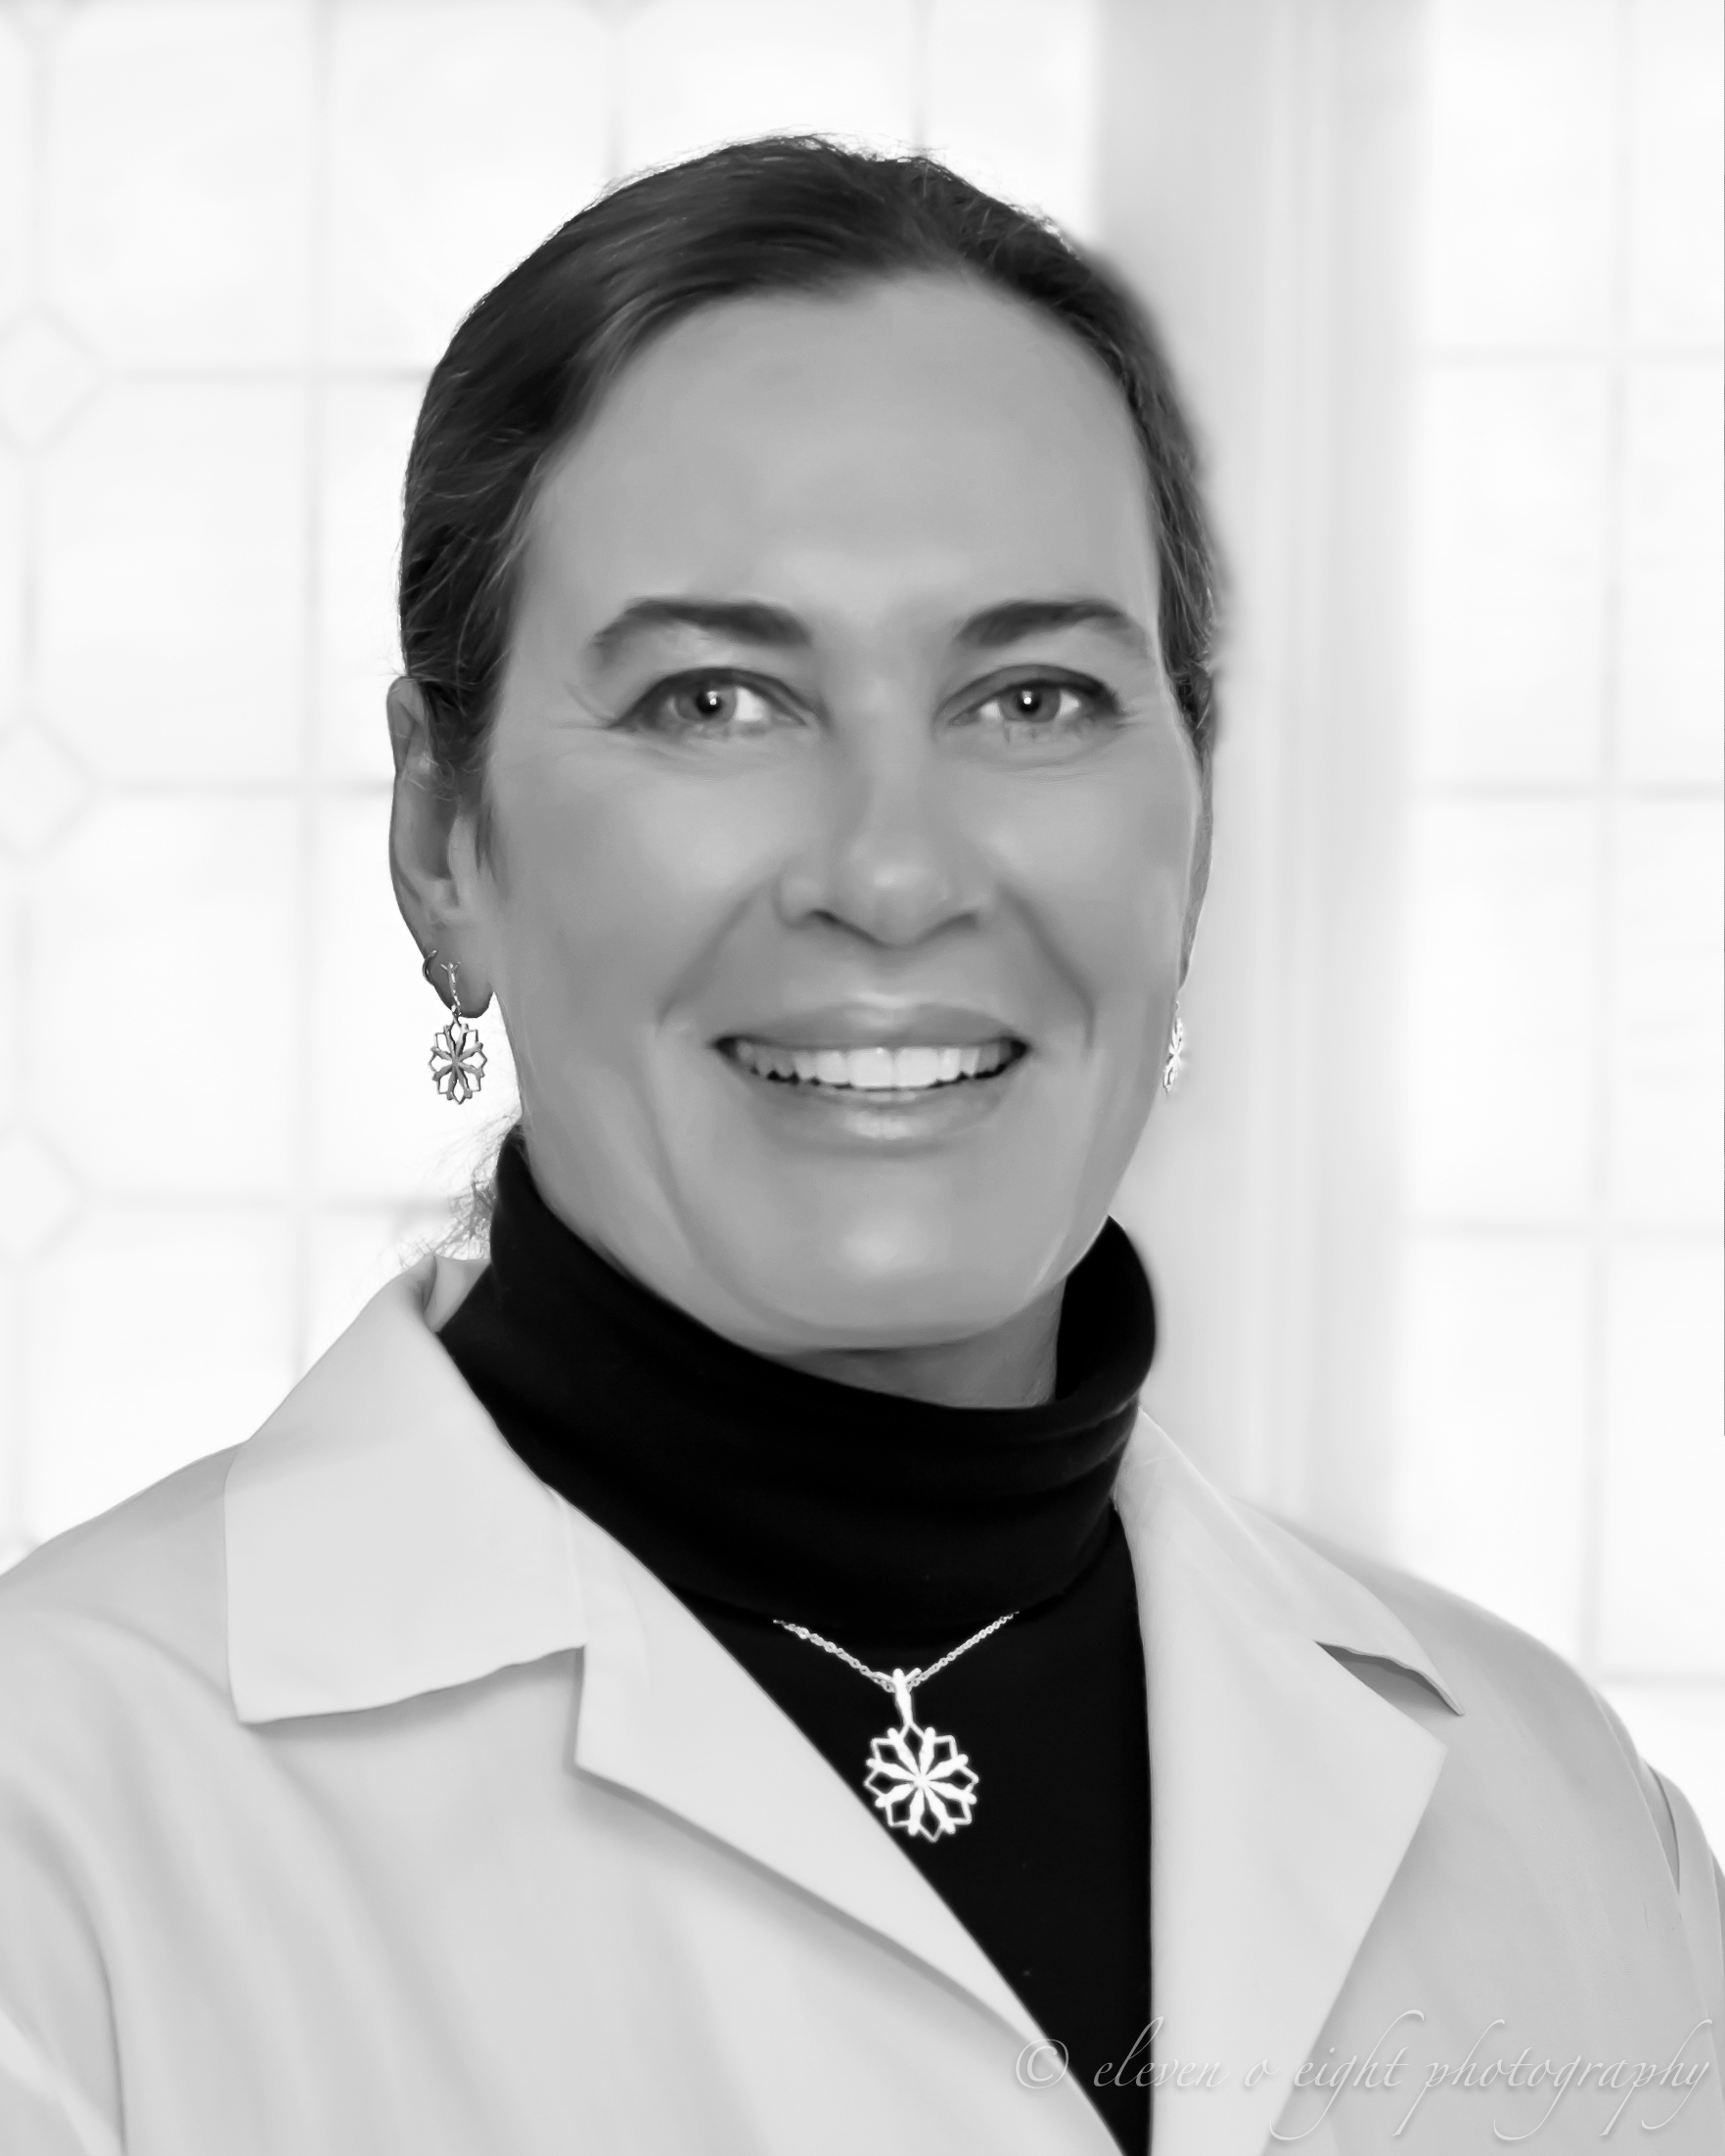 Dr. Jeanne O’Connell of Sylvana Medical & Aesthetics Center.